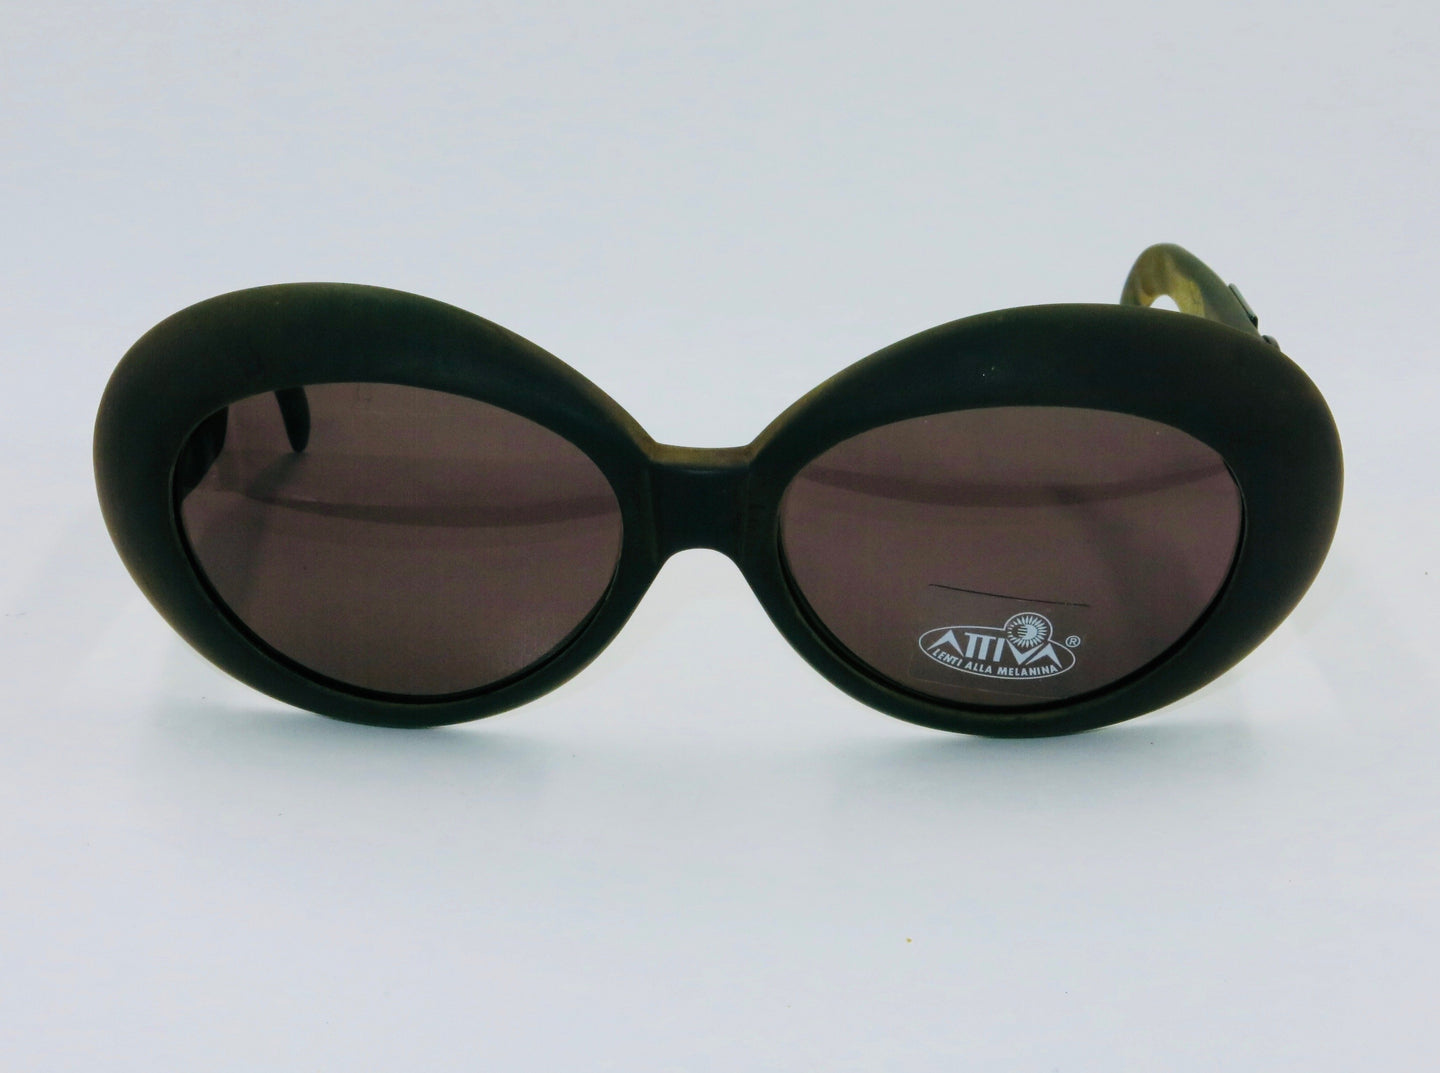 Fendi Sunglasses SL 7522 | Sunglasses by Fendi